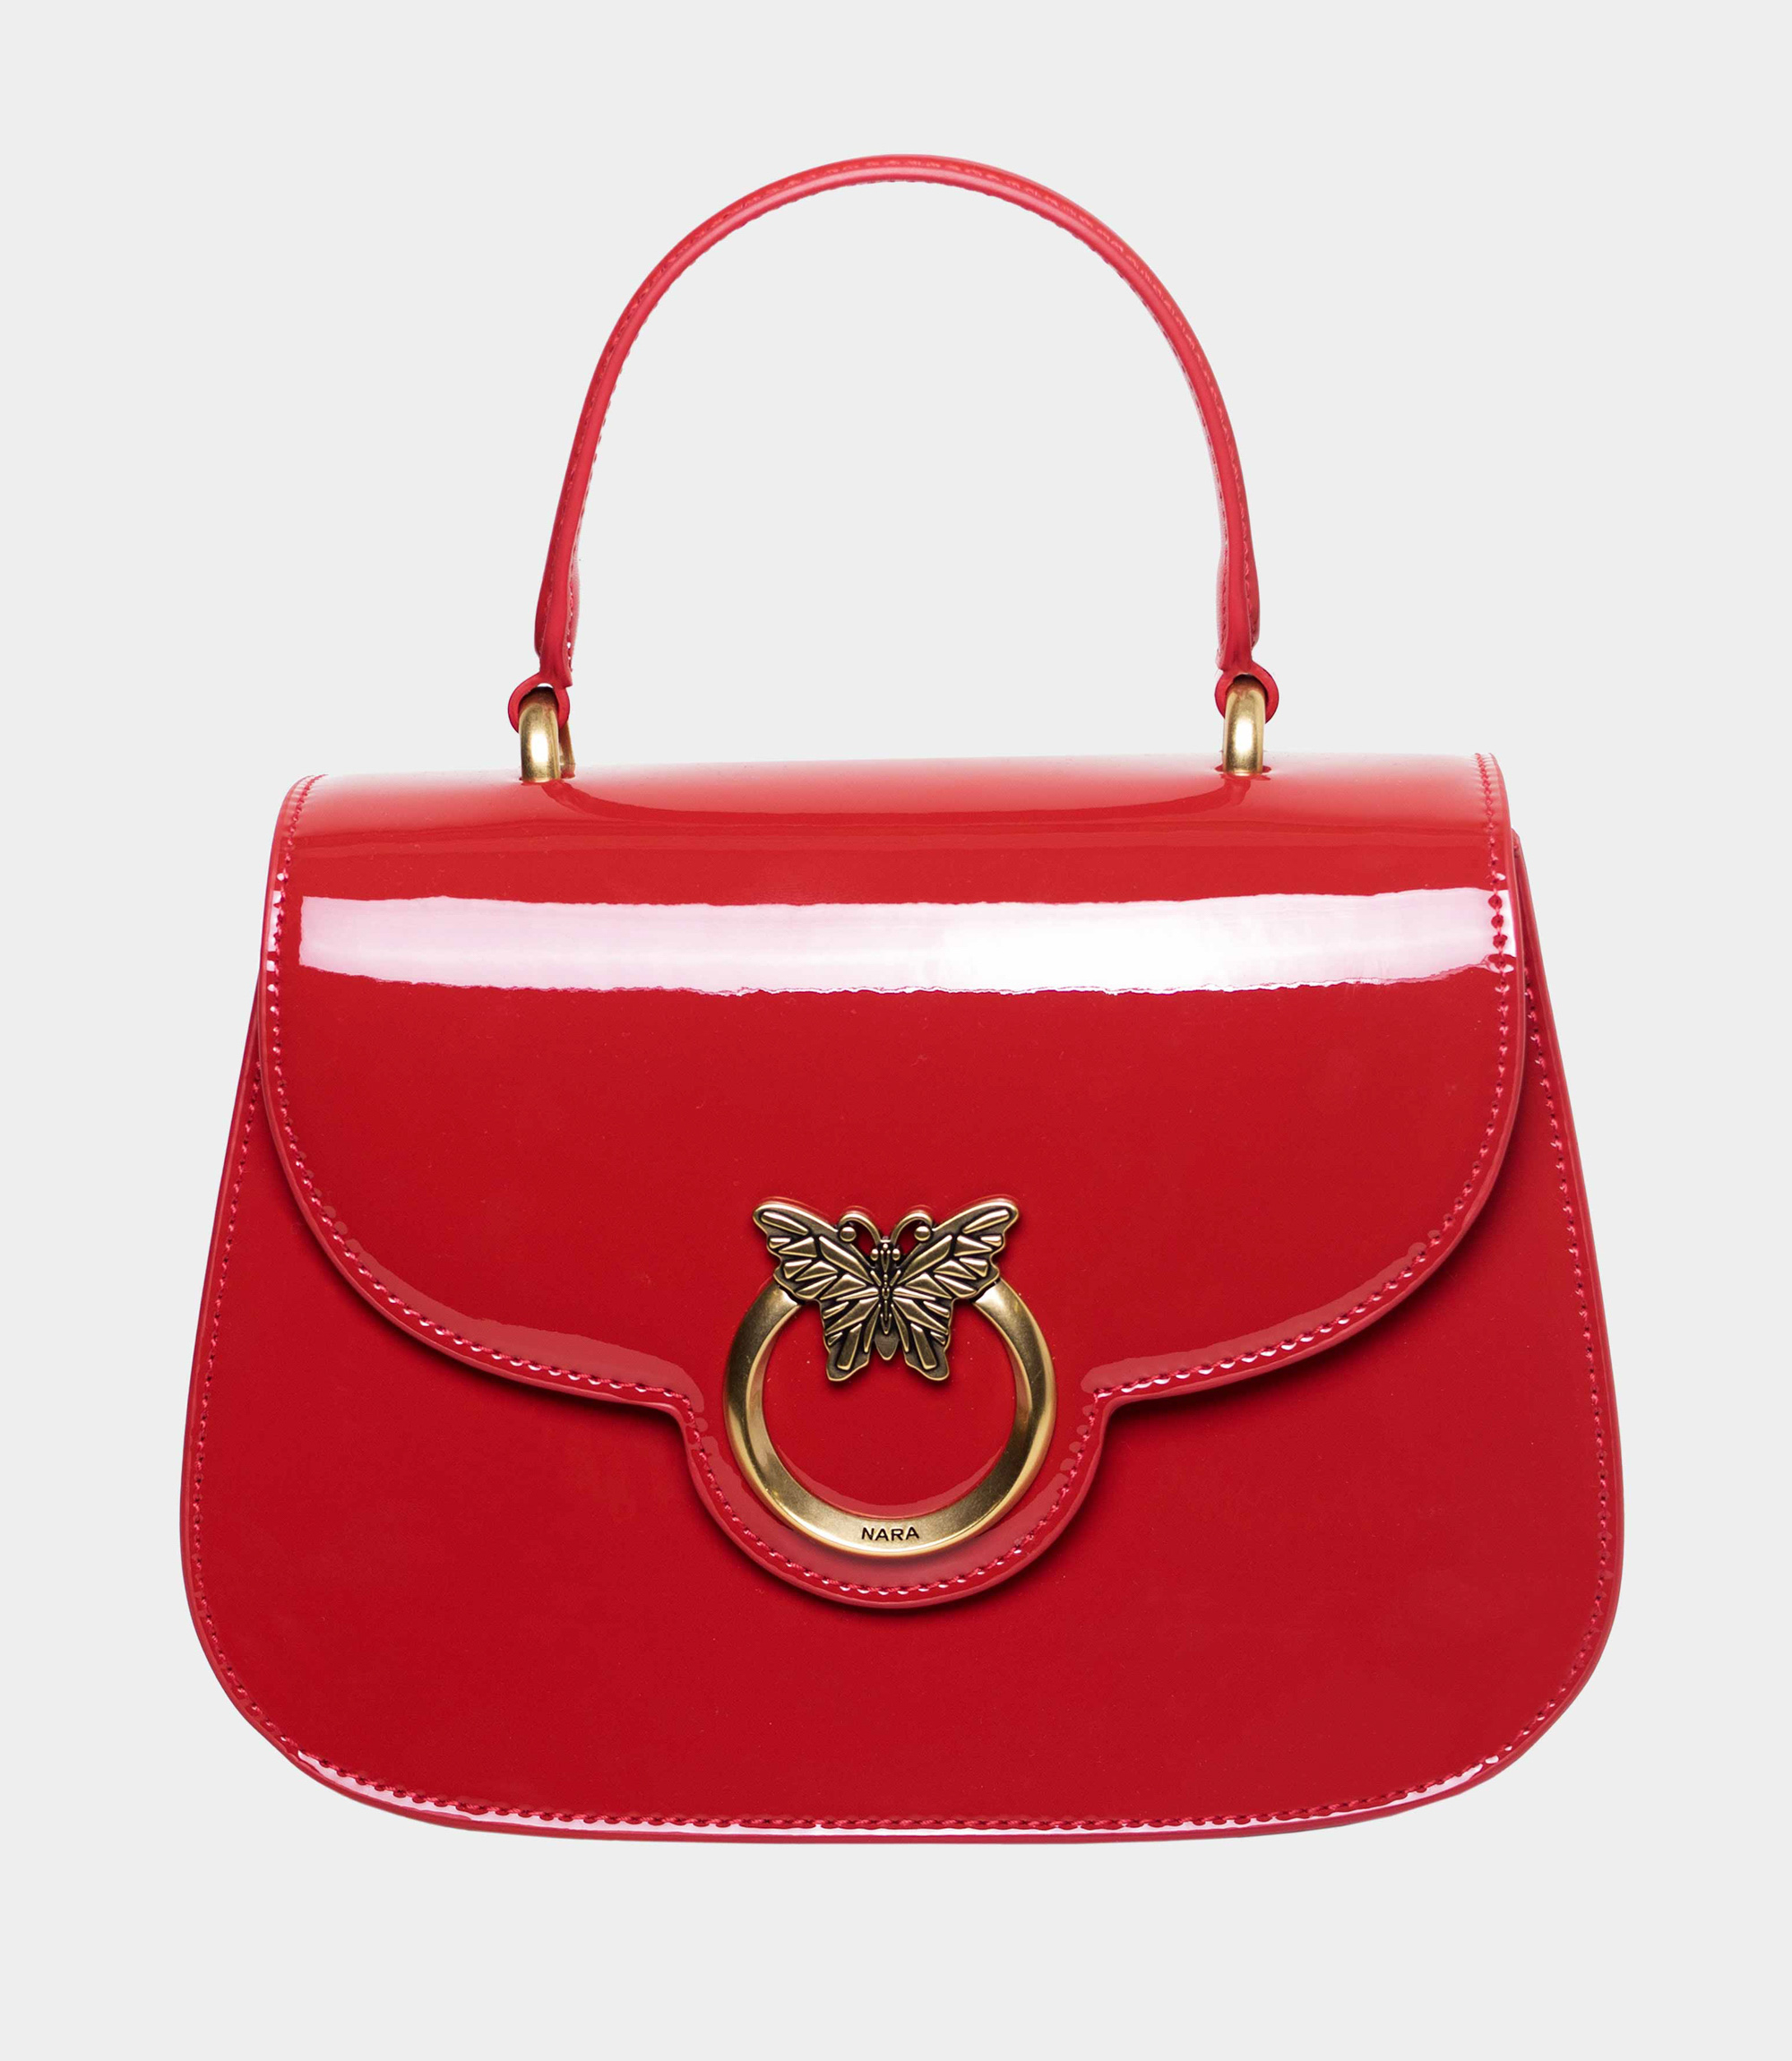 Red handbag made of patent leather - ACCESSORIES - NaraMilano